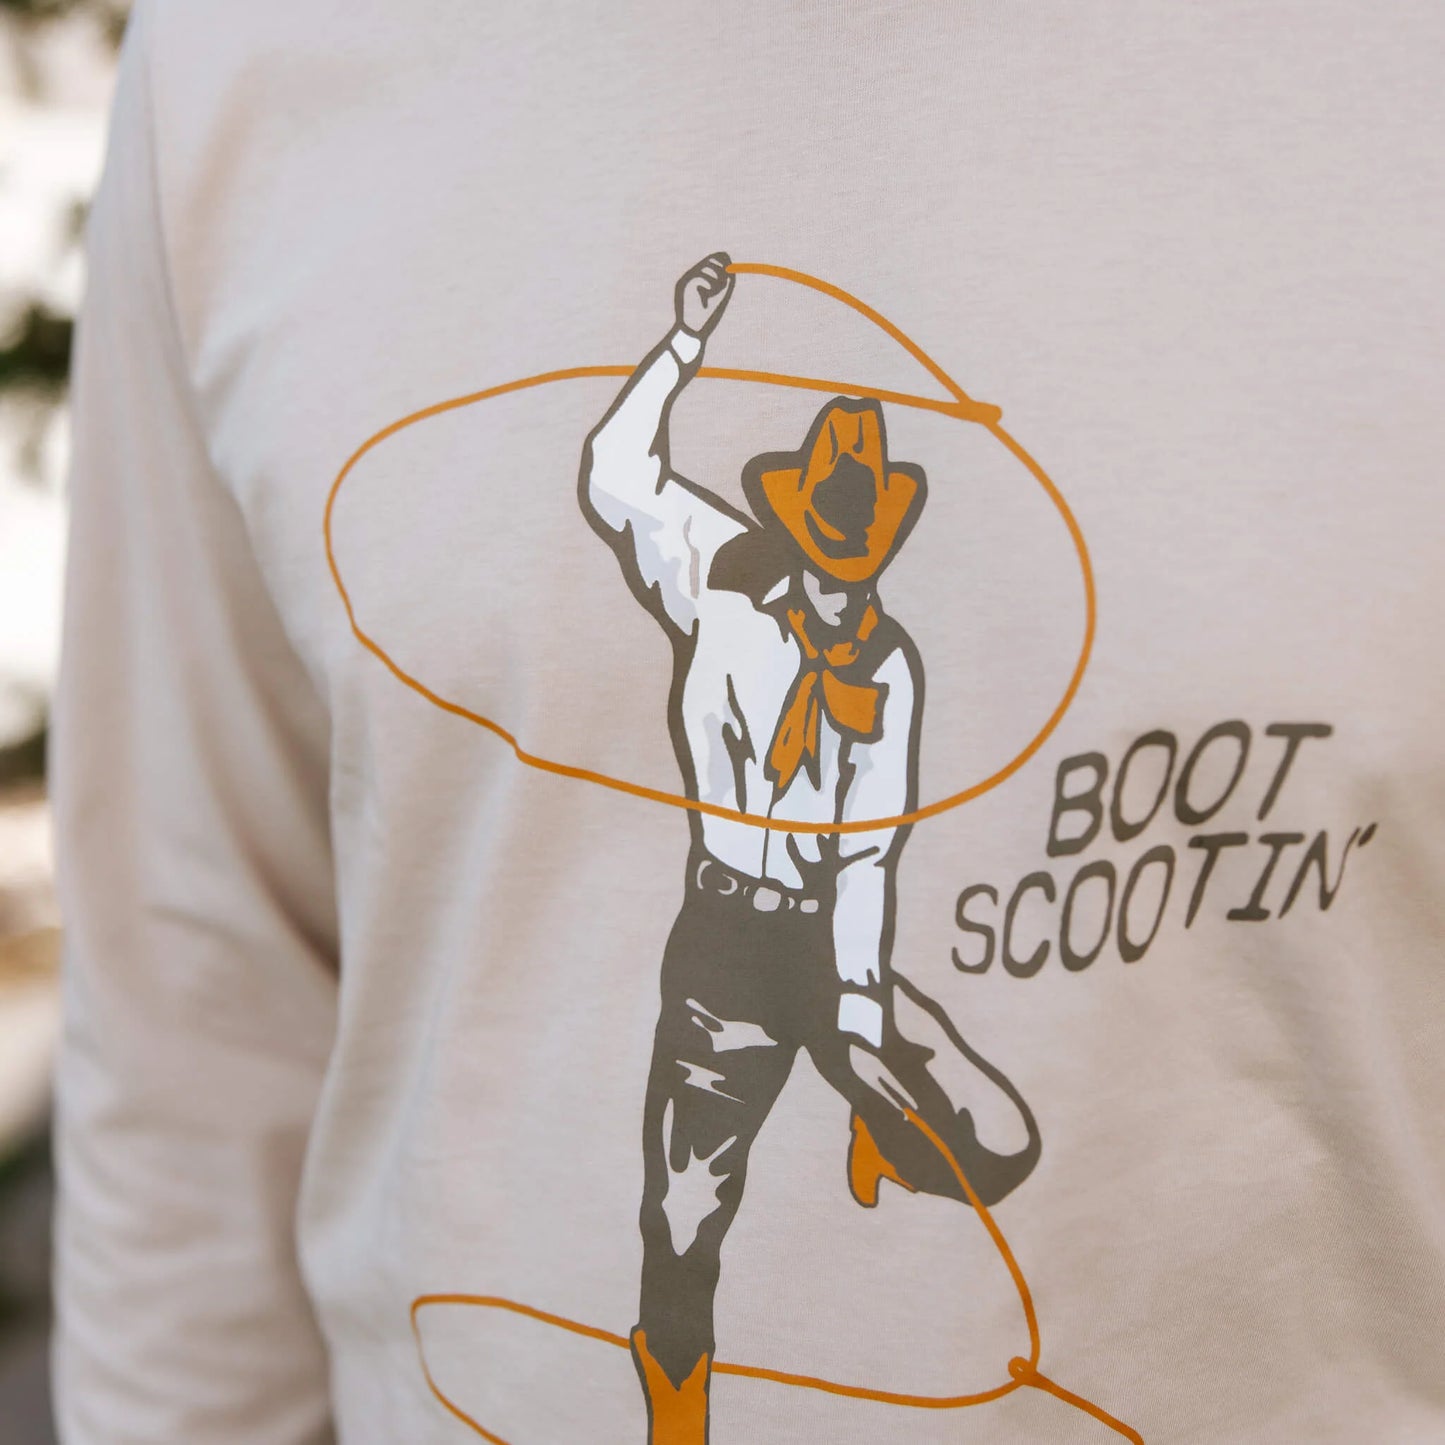 Boot Scootin' Long Sleeve